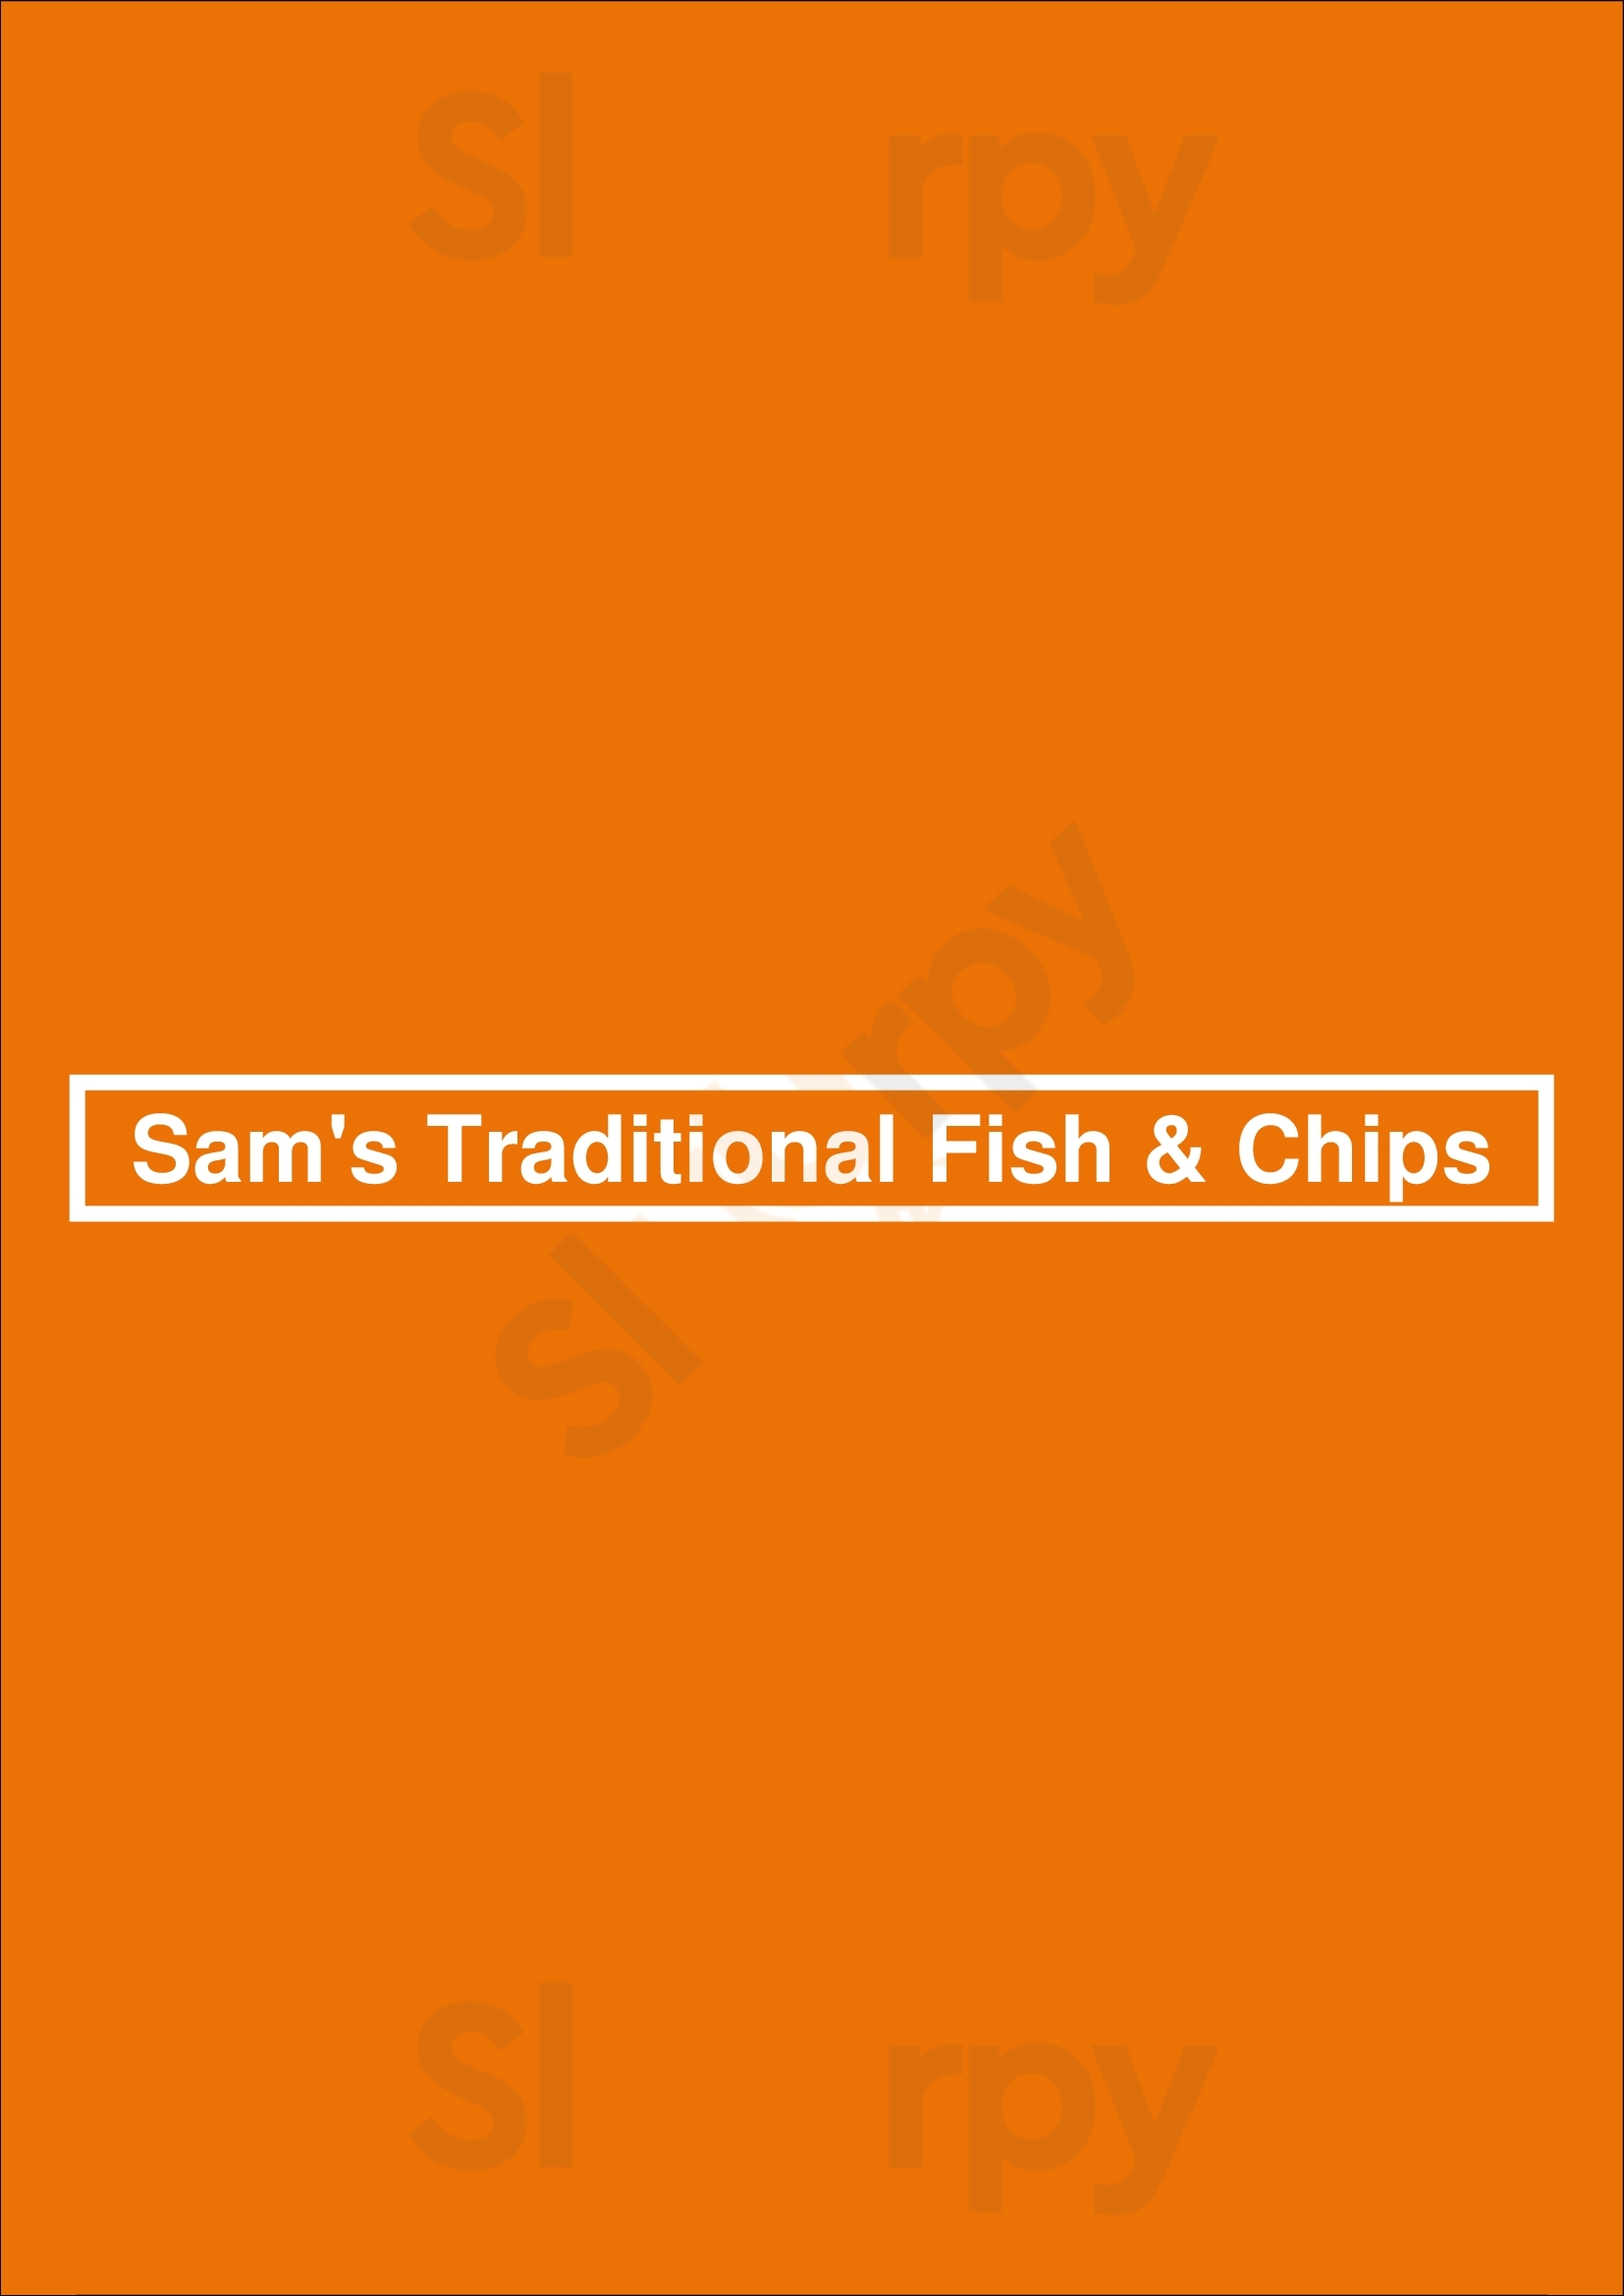 Sam's Traditional Fish & Chips Ashton in Makerfield Menu - 1